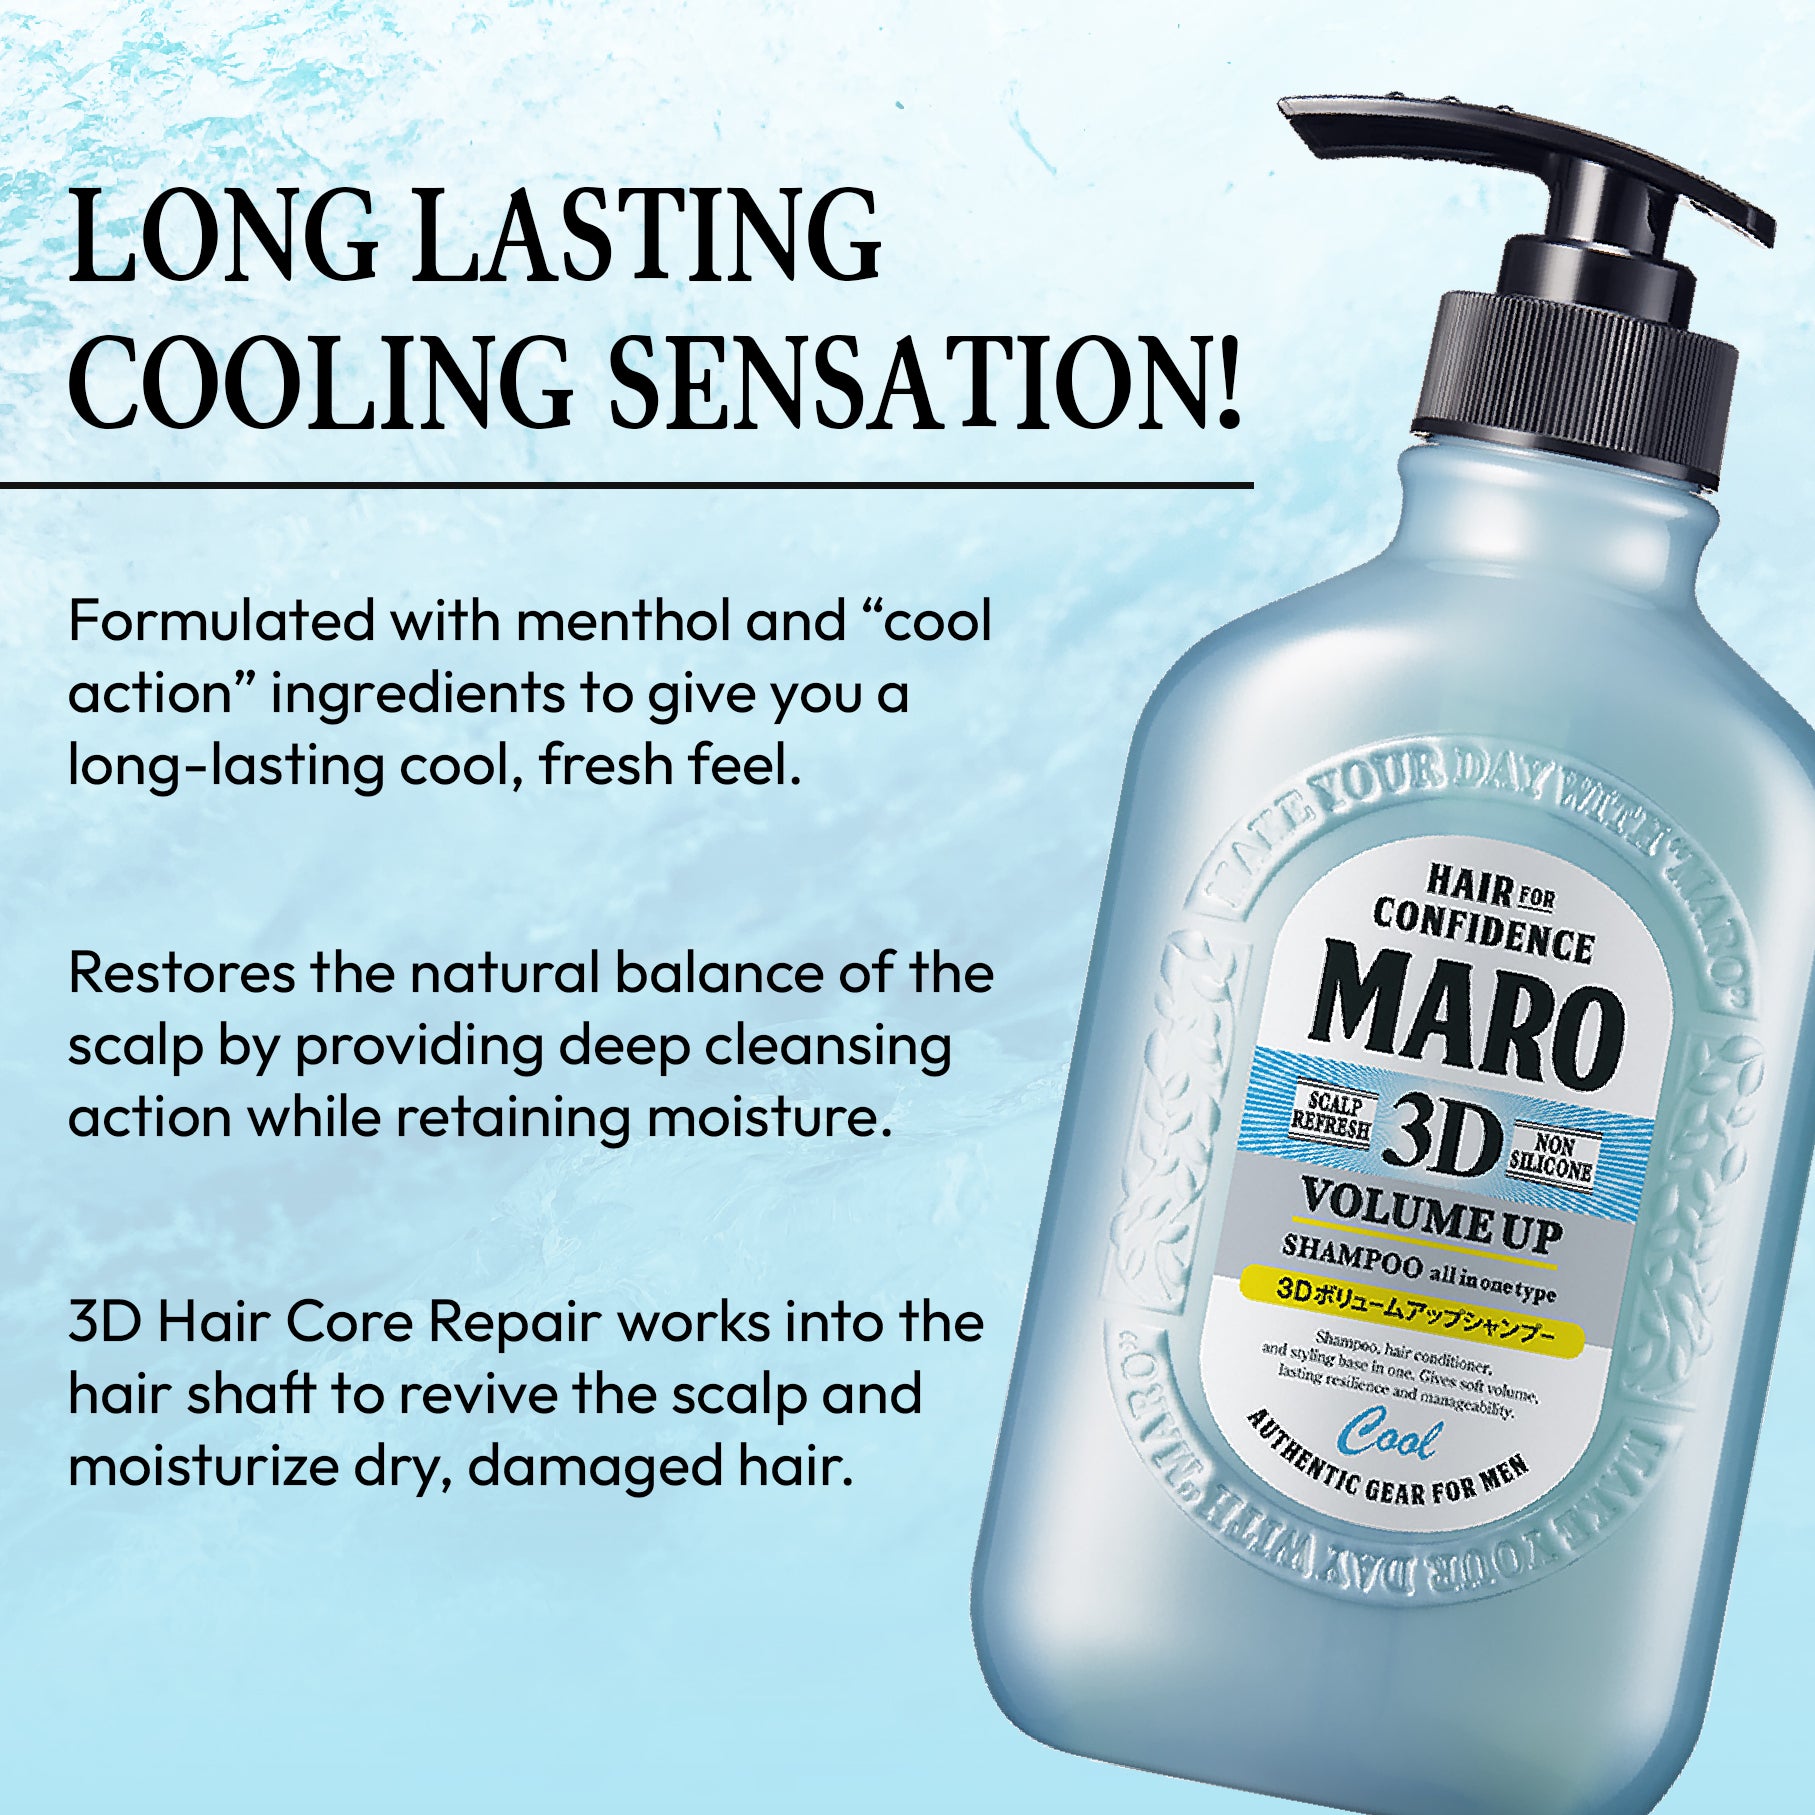 MARO 3D Volume Up Cool Shampoo